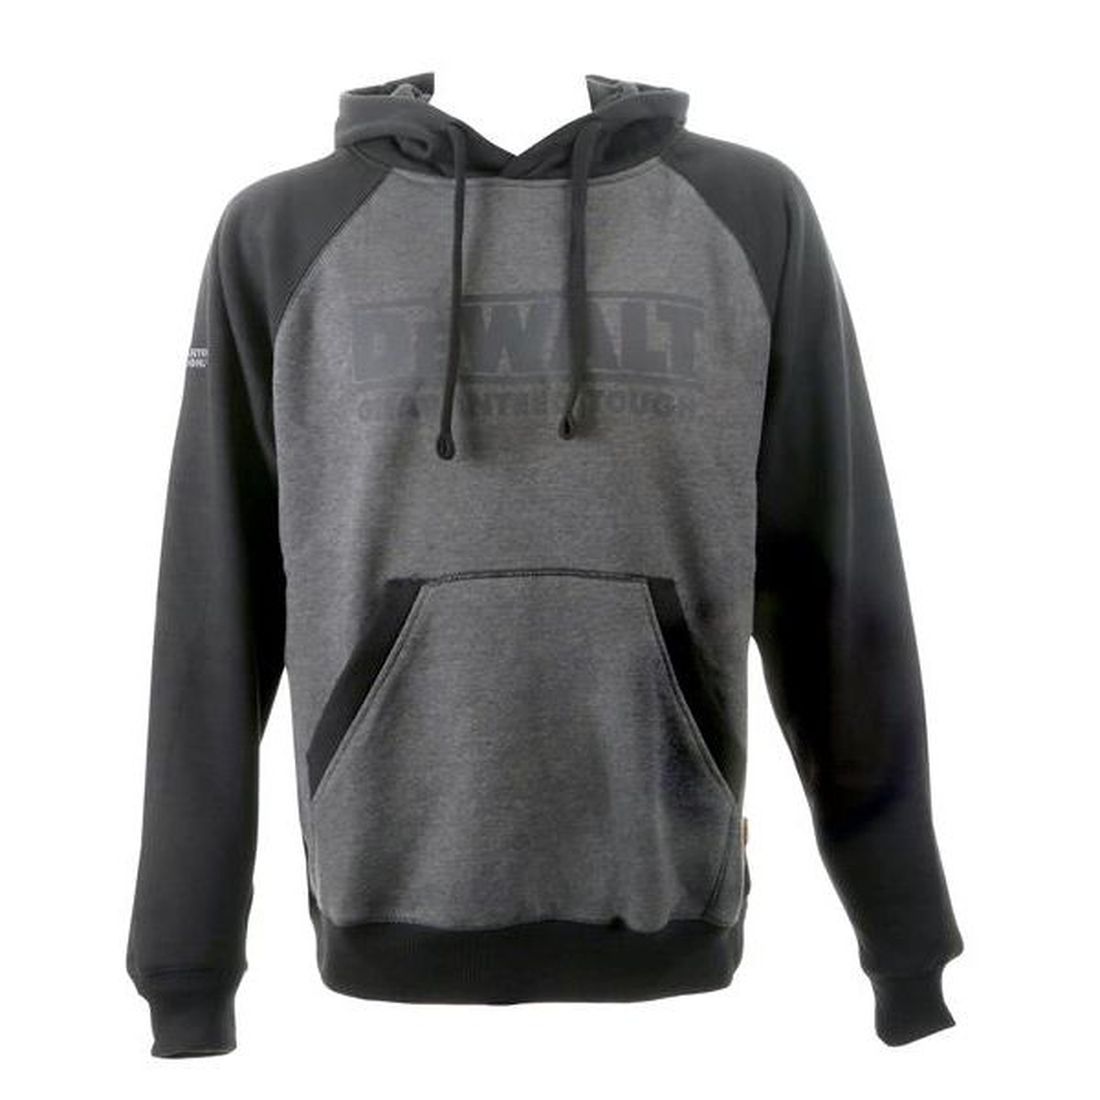 DEWALT Stratford Hooded Sweatshirt - XL (48in)                                         